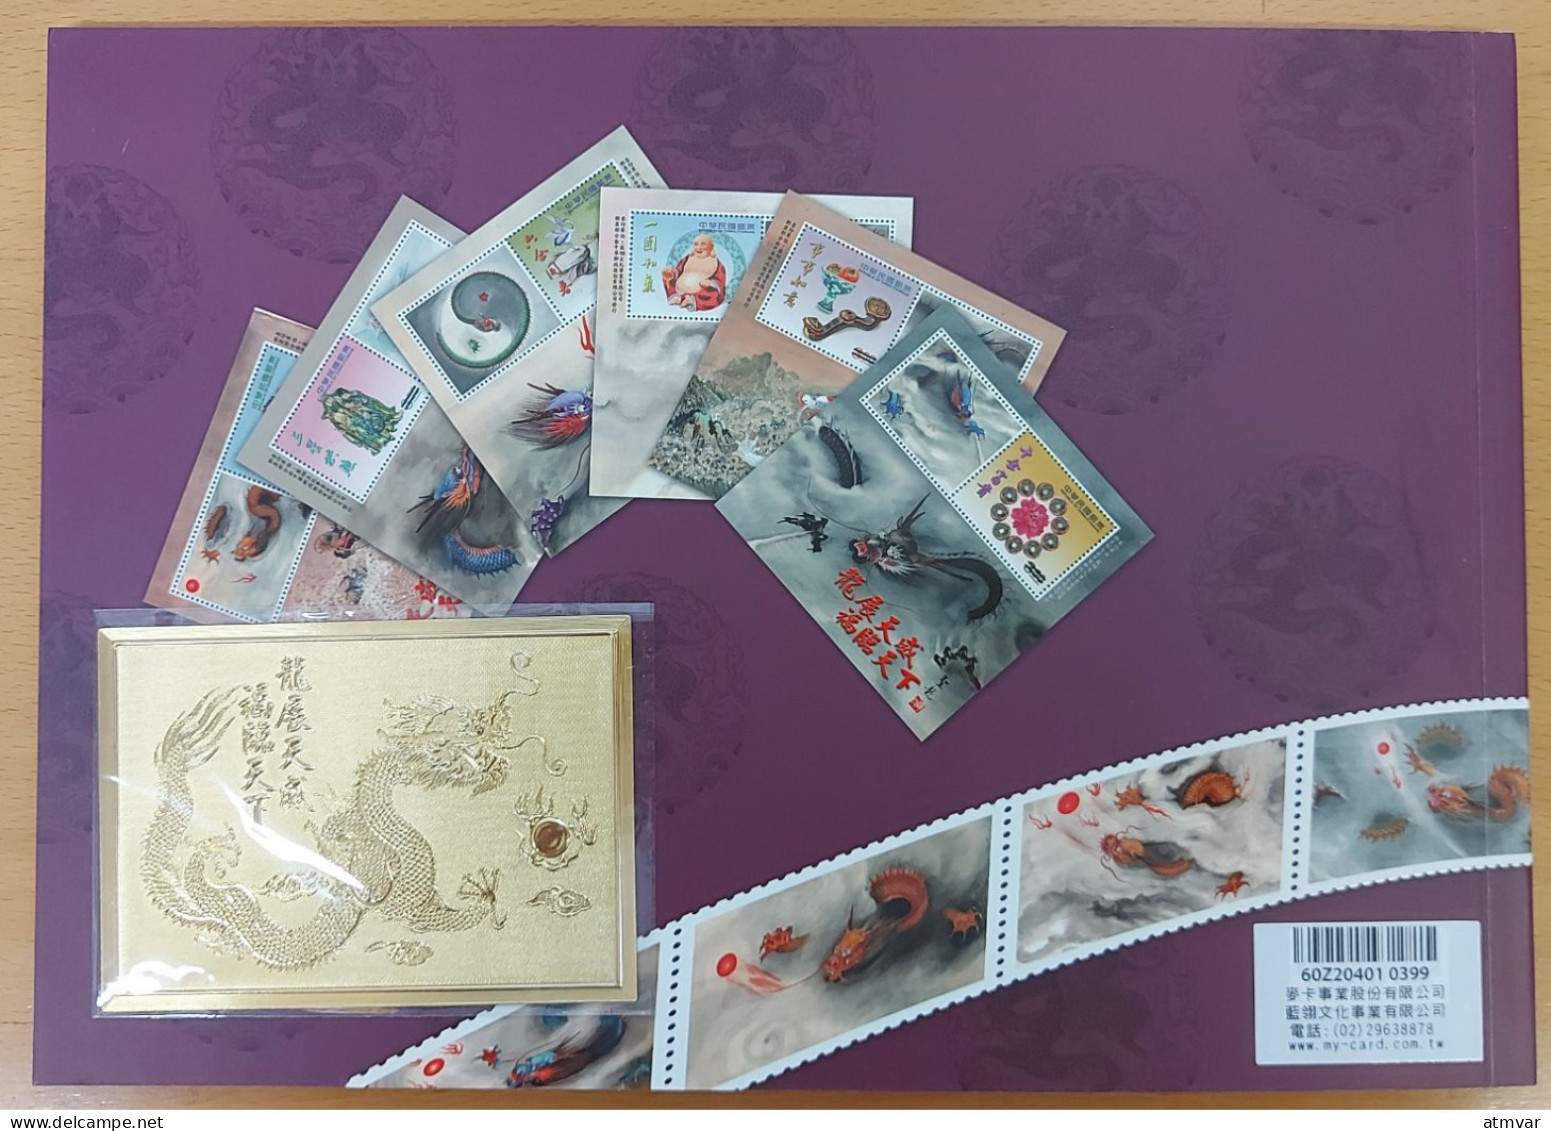 TAIWAN - Philatelic stamps book / Philateliebuch / Livre philatélique / Libro filatélico